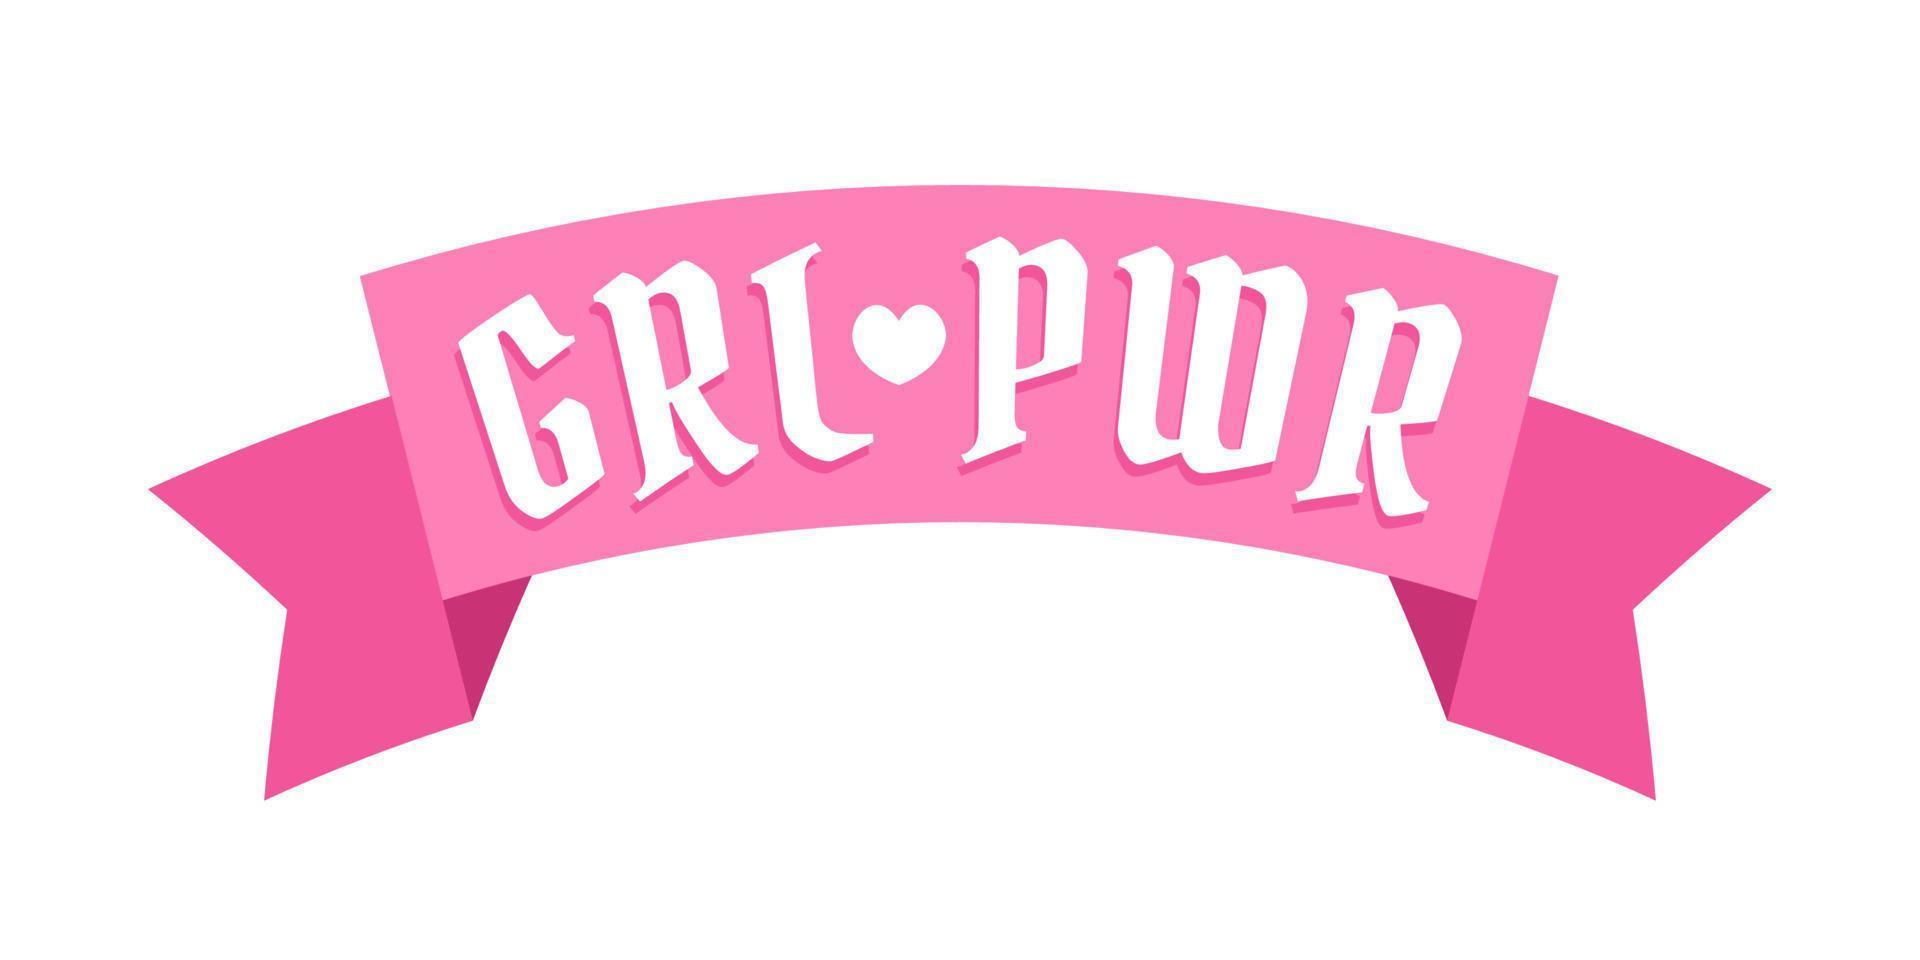 vektor emblem med text av girl power med rosa band